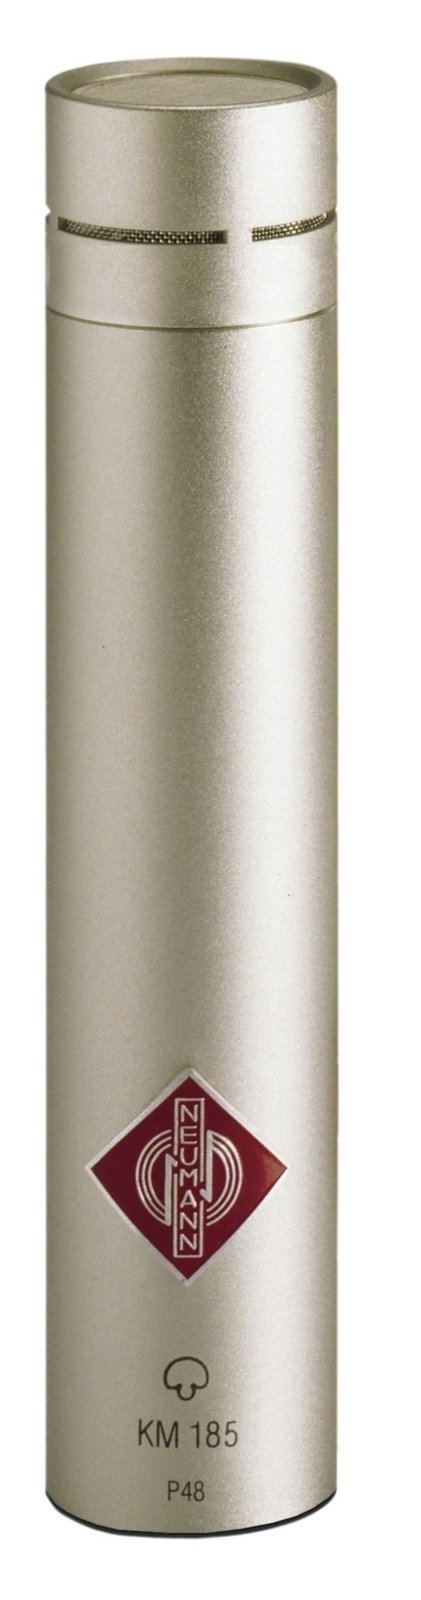 Студиен кондензаторен микрофон Neumann KM185 Студиен кондензаторен микрофон